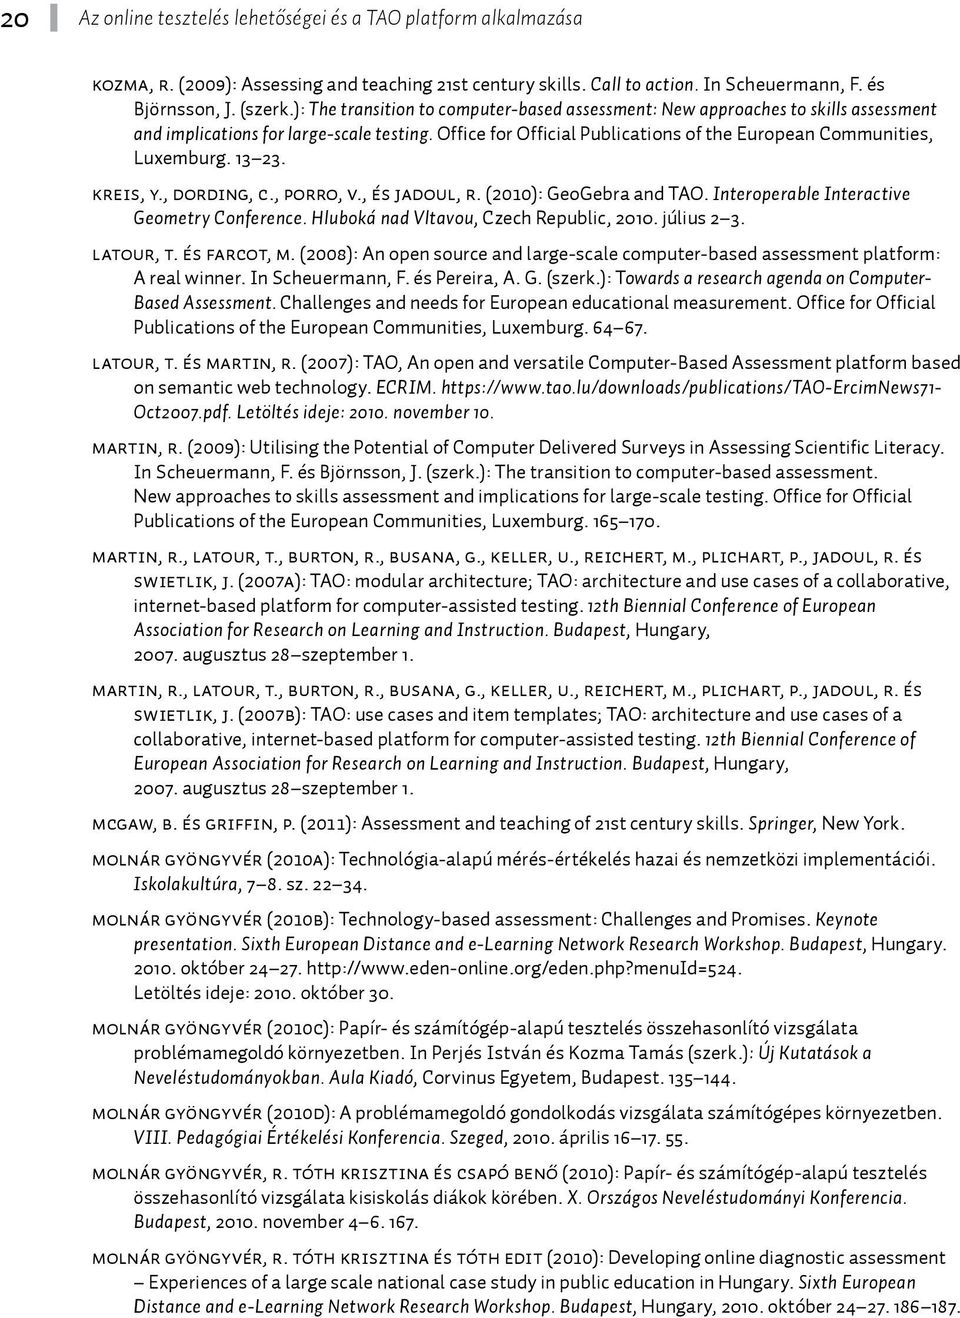 13 23. Kreis, Y., Dording, C., Porro, V., és Jadoul, R. (2010): GeoGebra and TAO. Interoperable Interactive Geometry Conference. Hluboká nad Vltavou, Czech Republic, 2010. július 2 3. Latour, T.